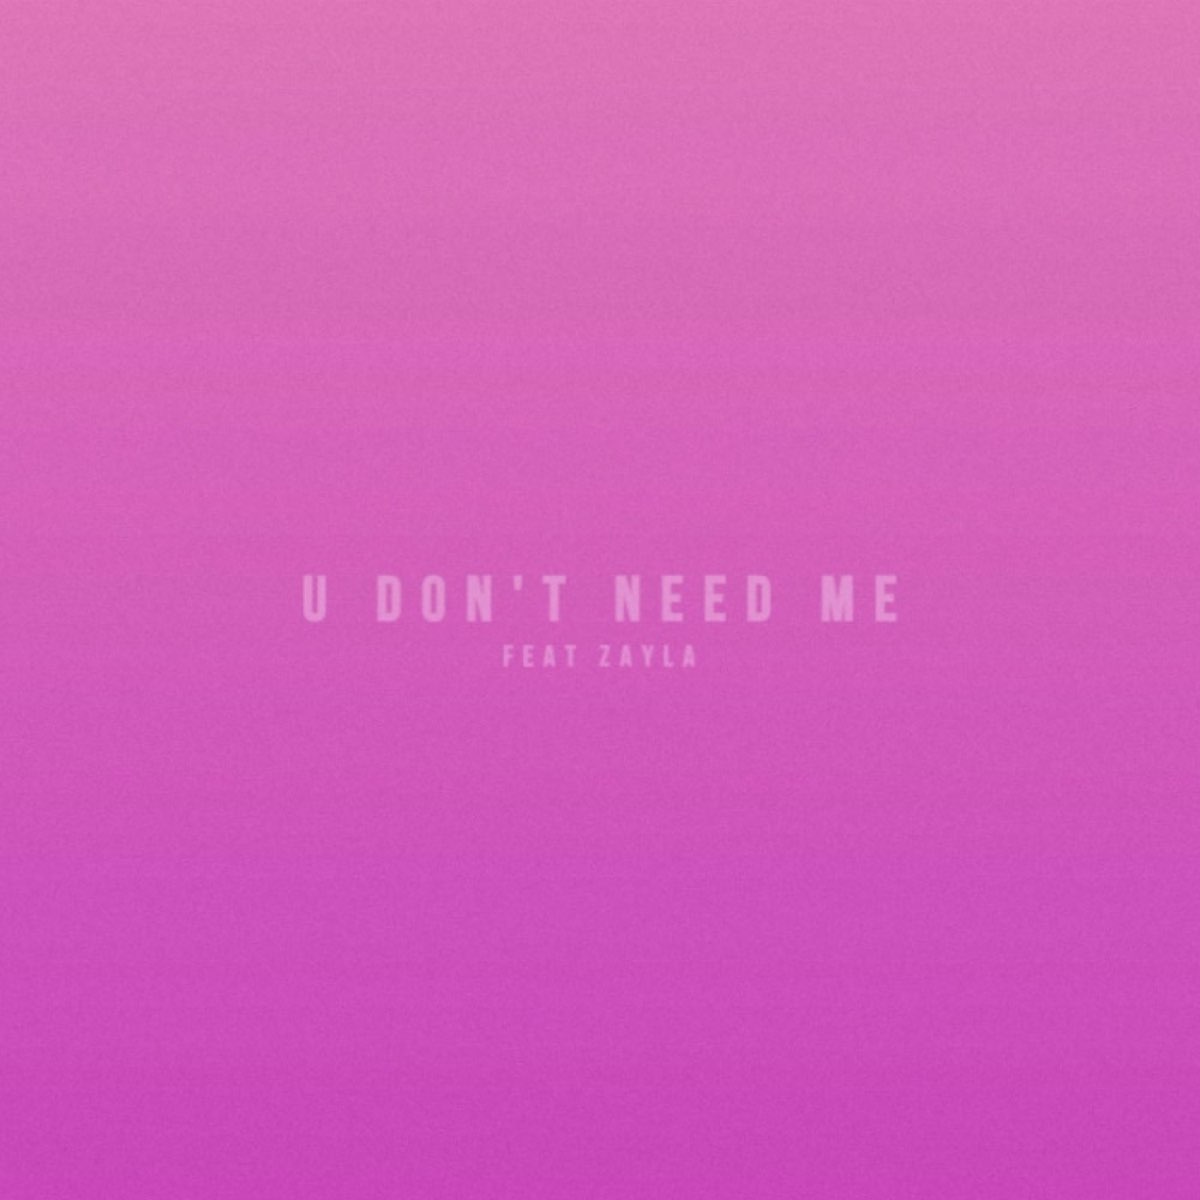 ‎U Don't Need Me (feat. Zayla) - Single - Album by Oniimukuu - Apple Music